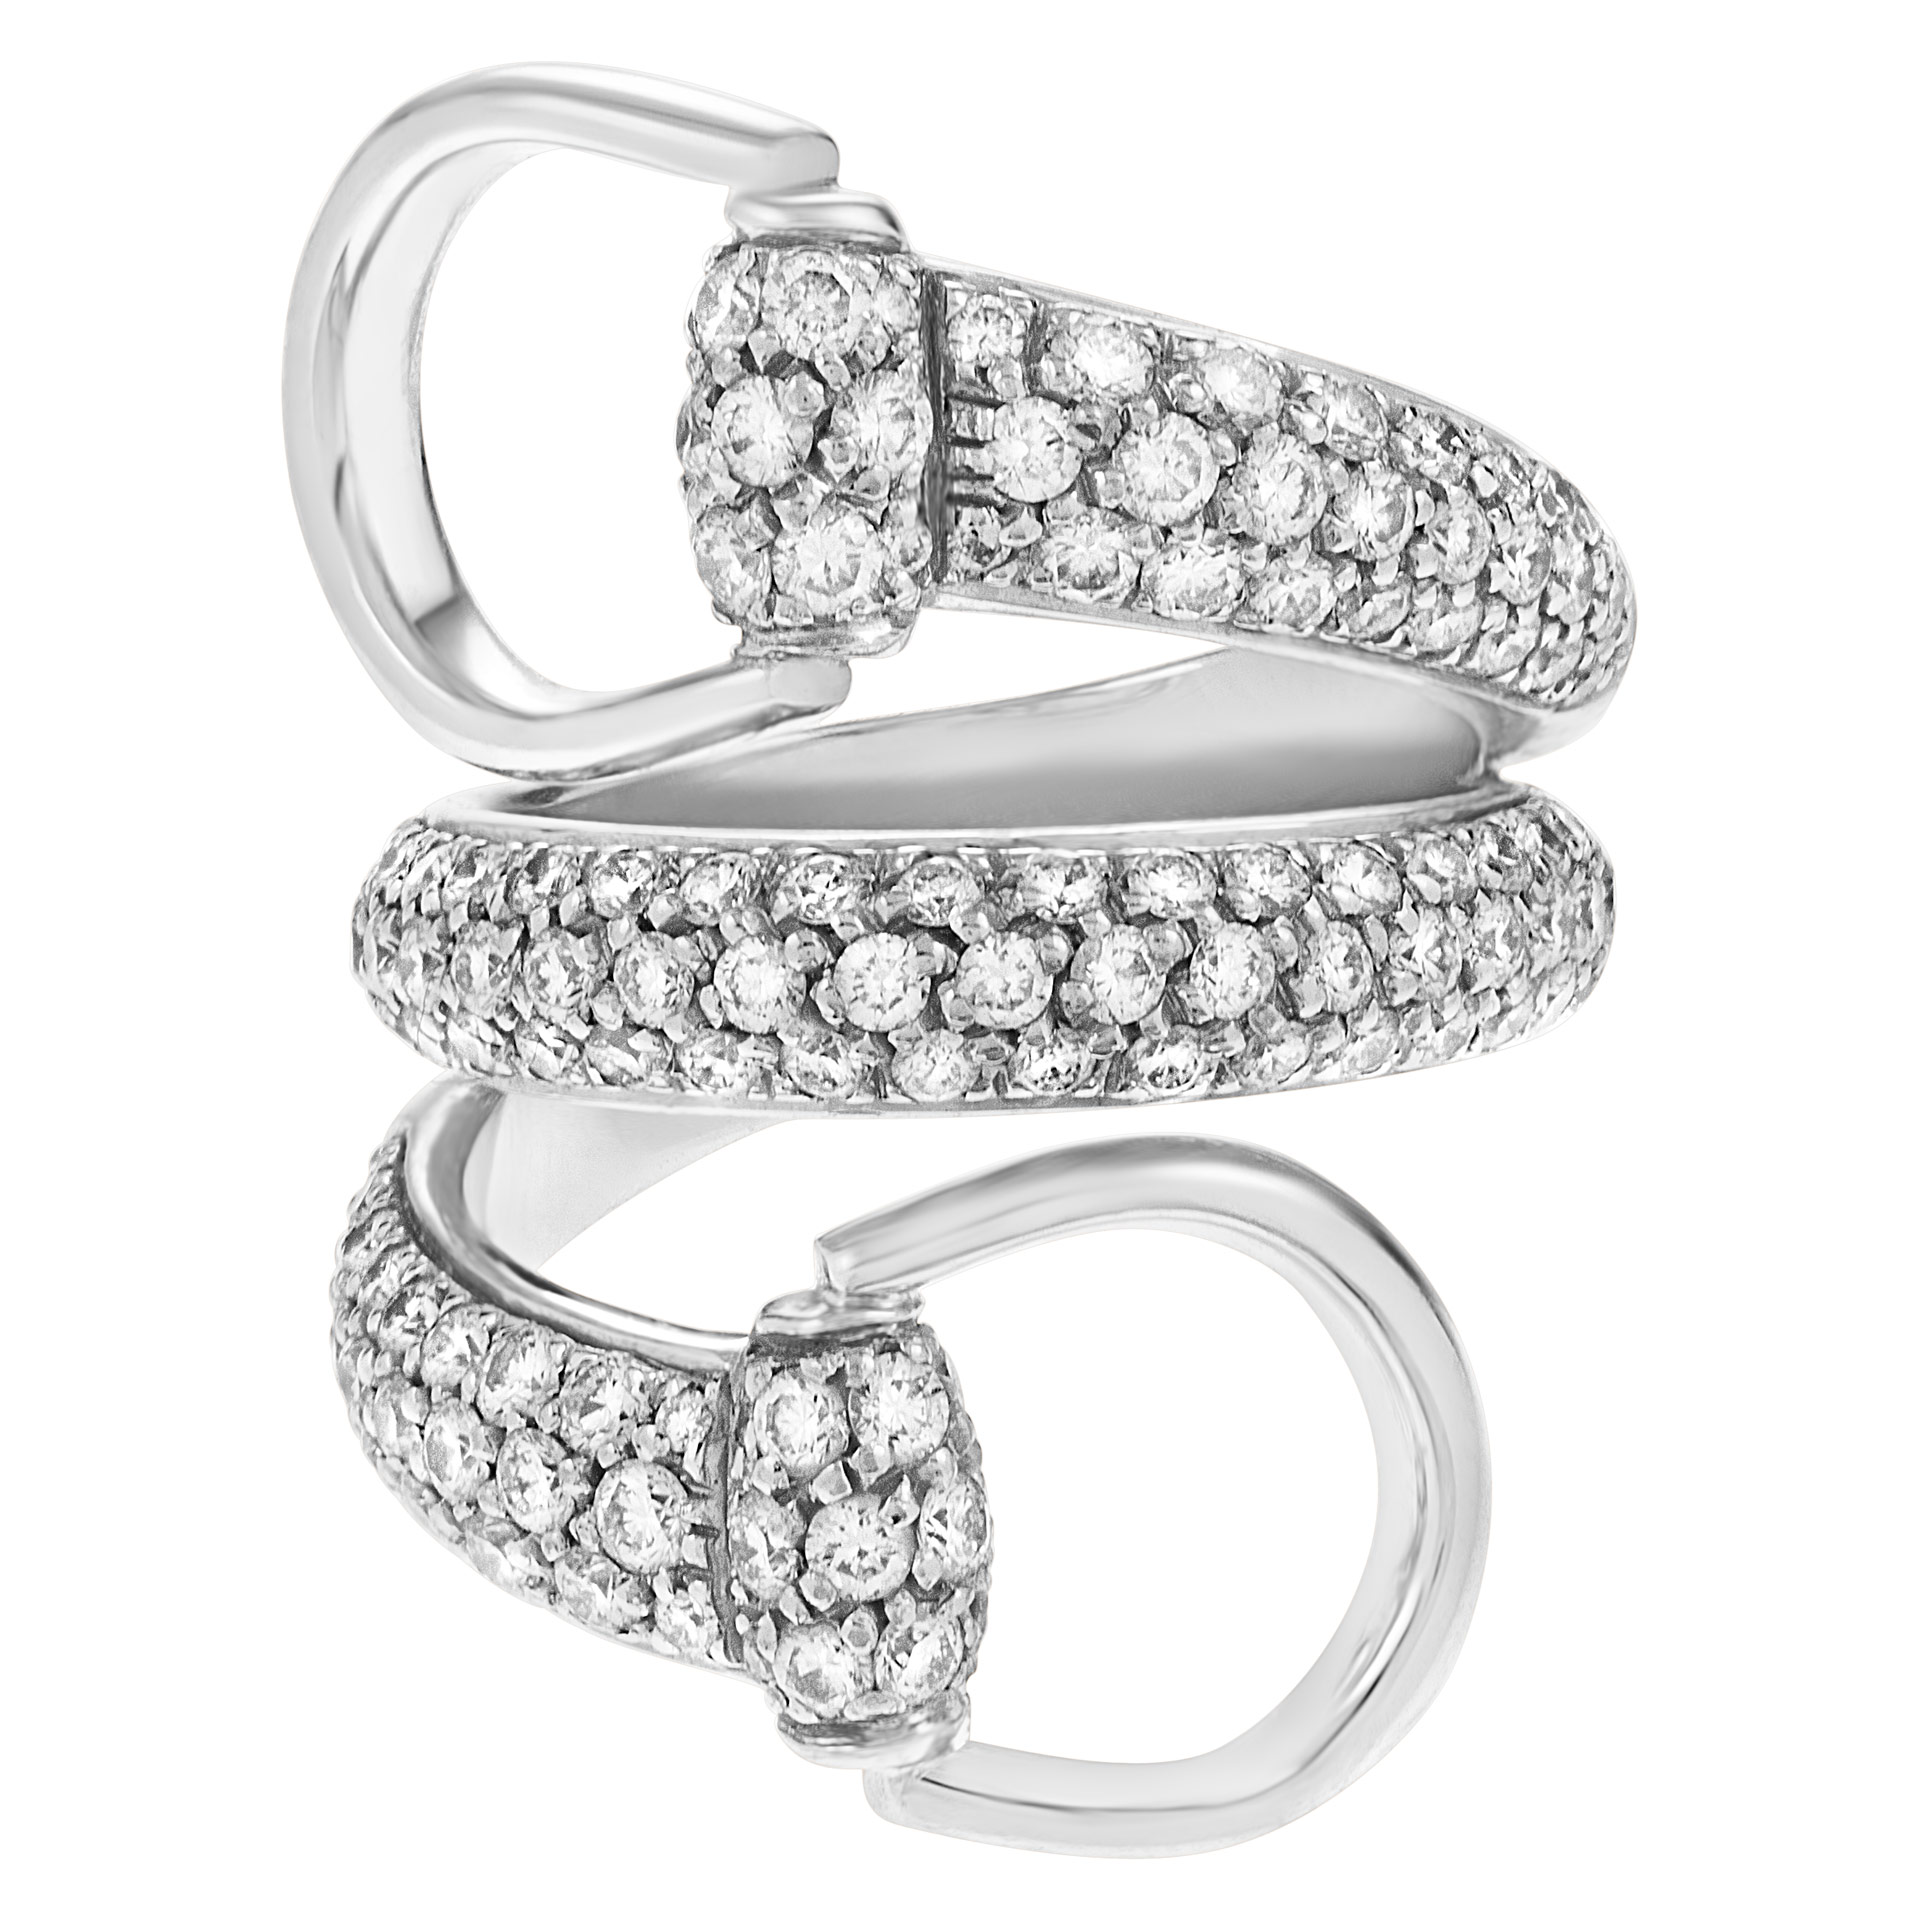 Gucci Horsebit diamond ring in 18k white gold. 1.98 carats. Size 6 image 1